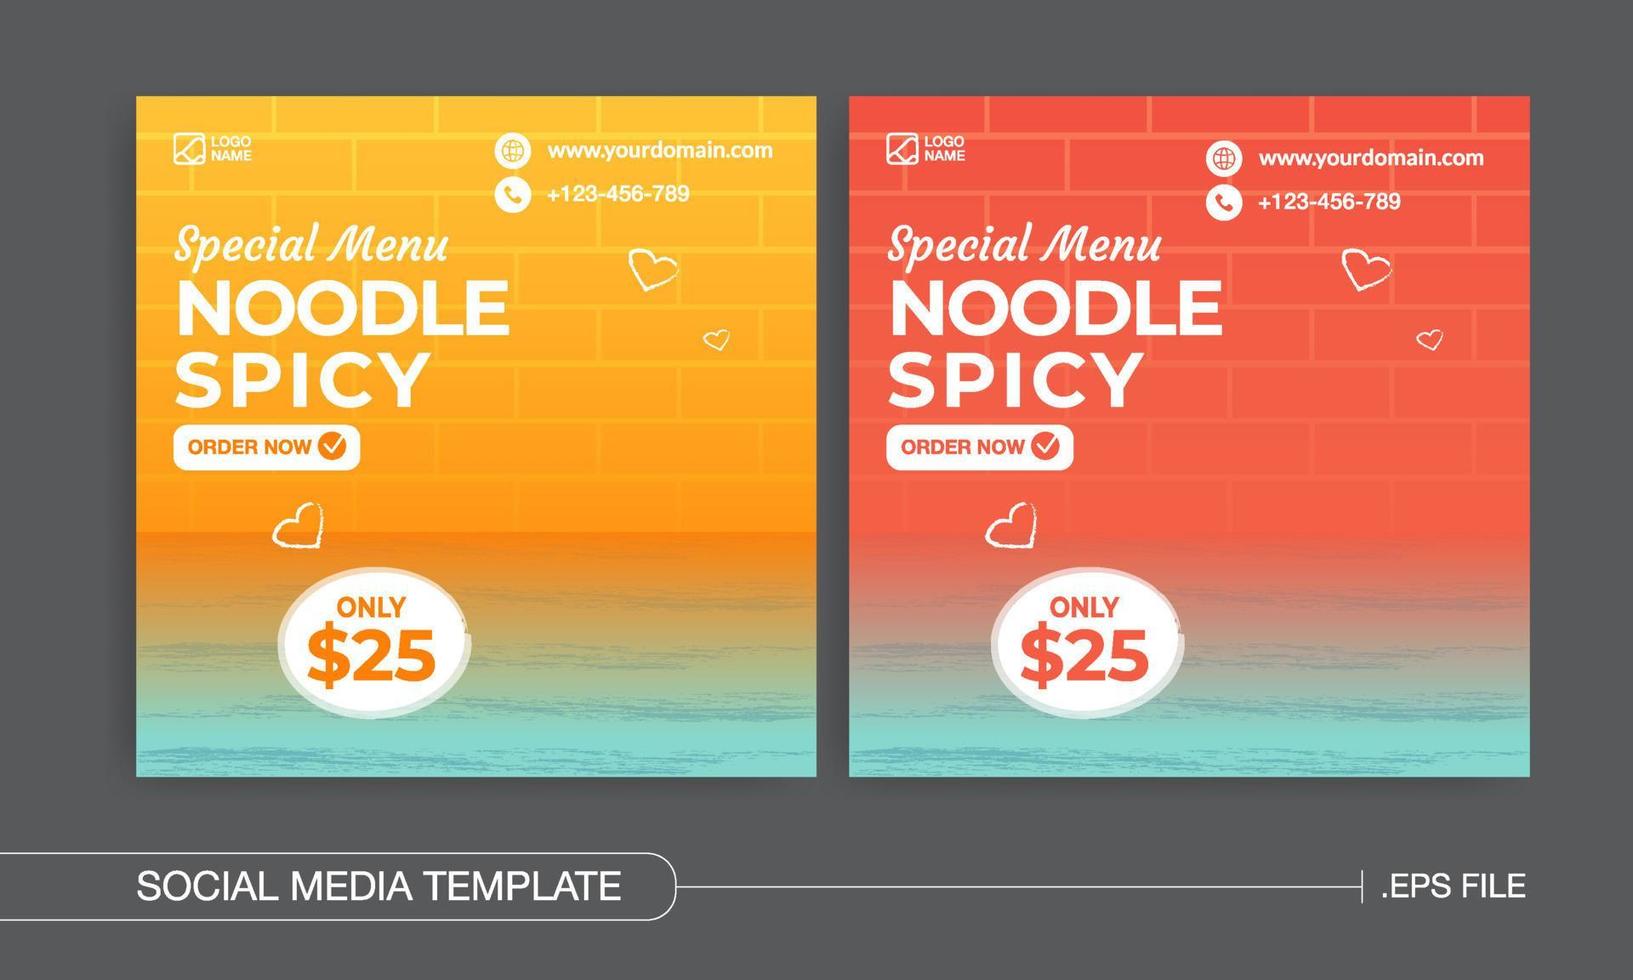 Special menu noodle spicy template for social media promotion Premium Vector